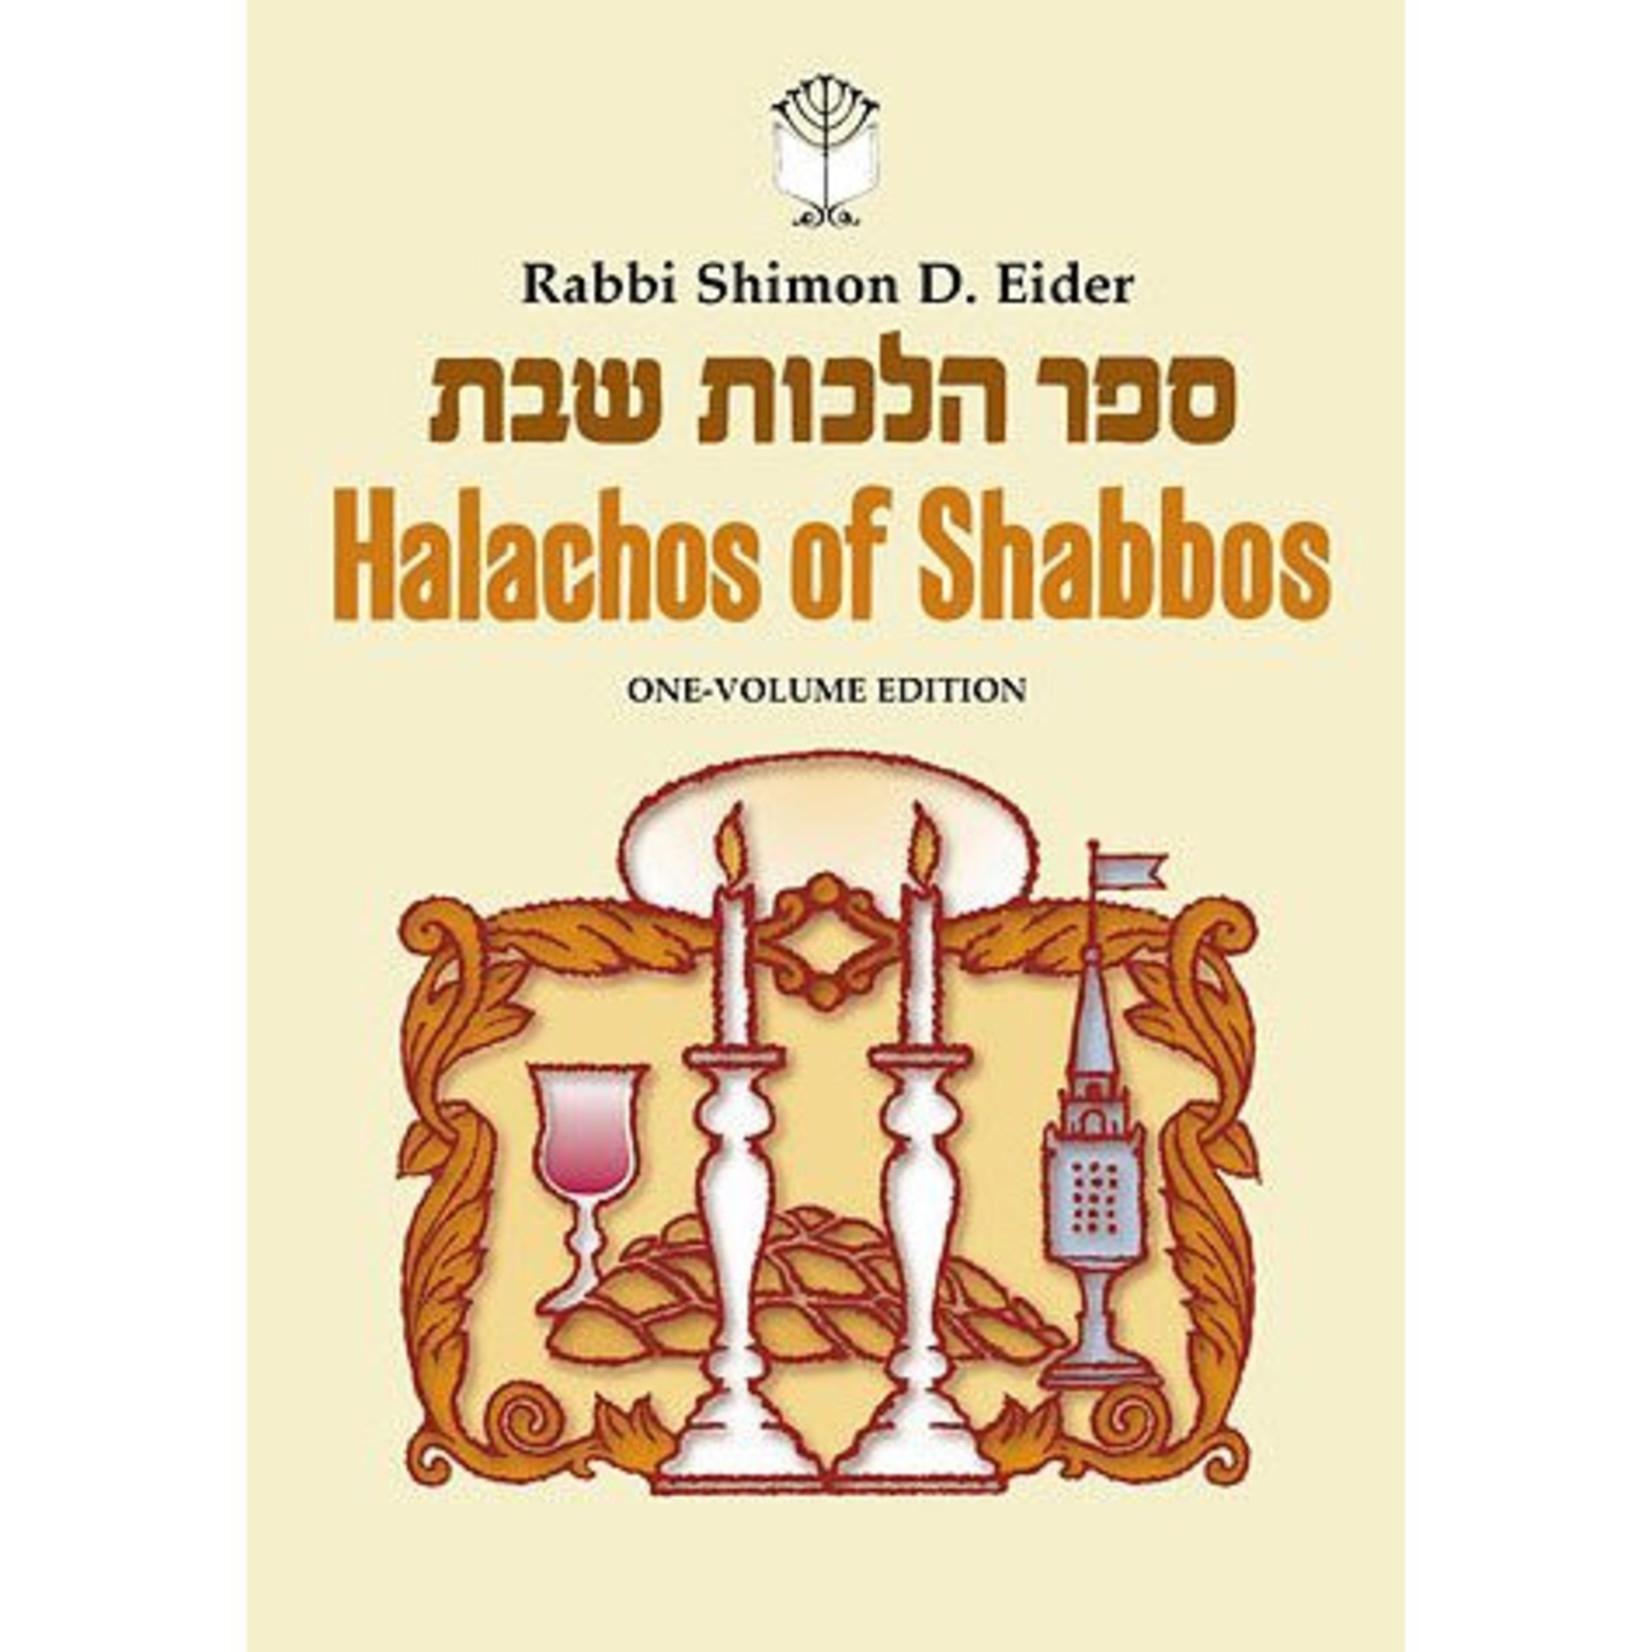 Halachos of Shabbos